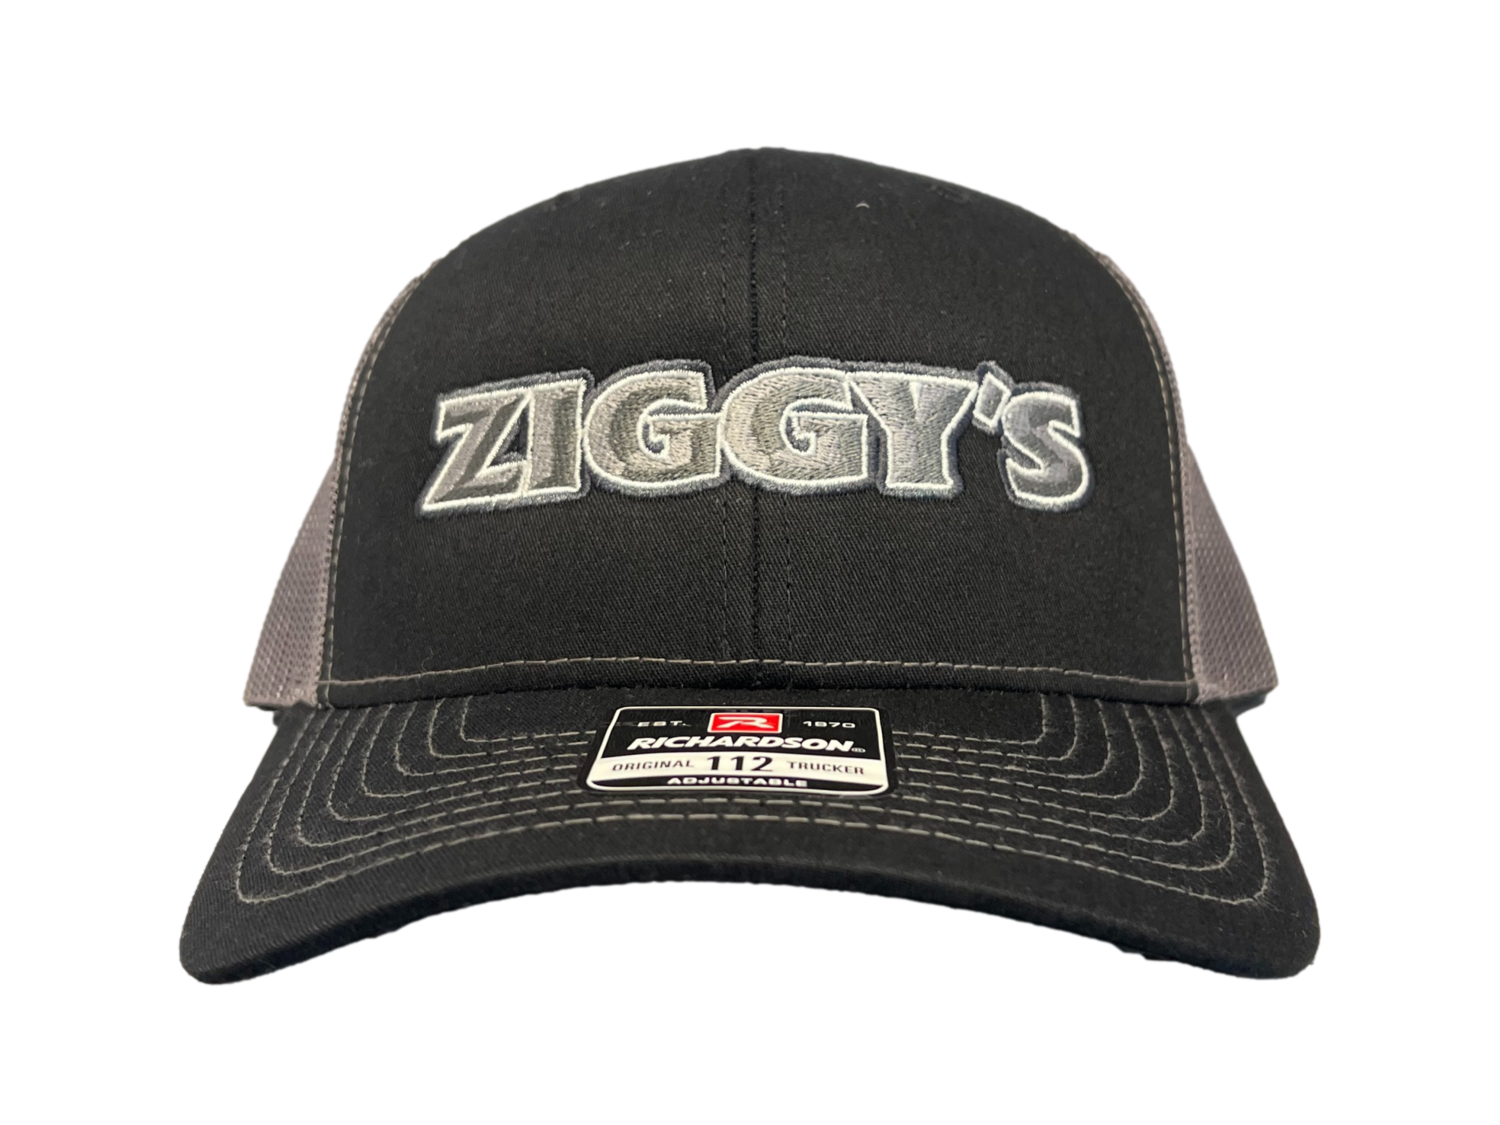 Ziggy's Trucker Snapback Black / Grey